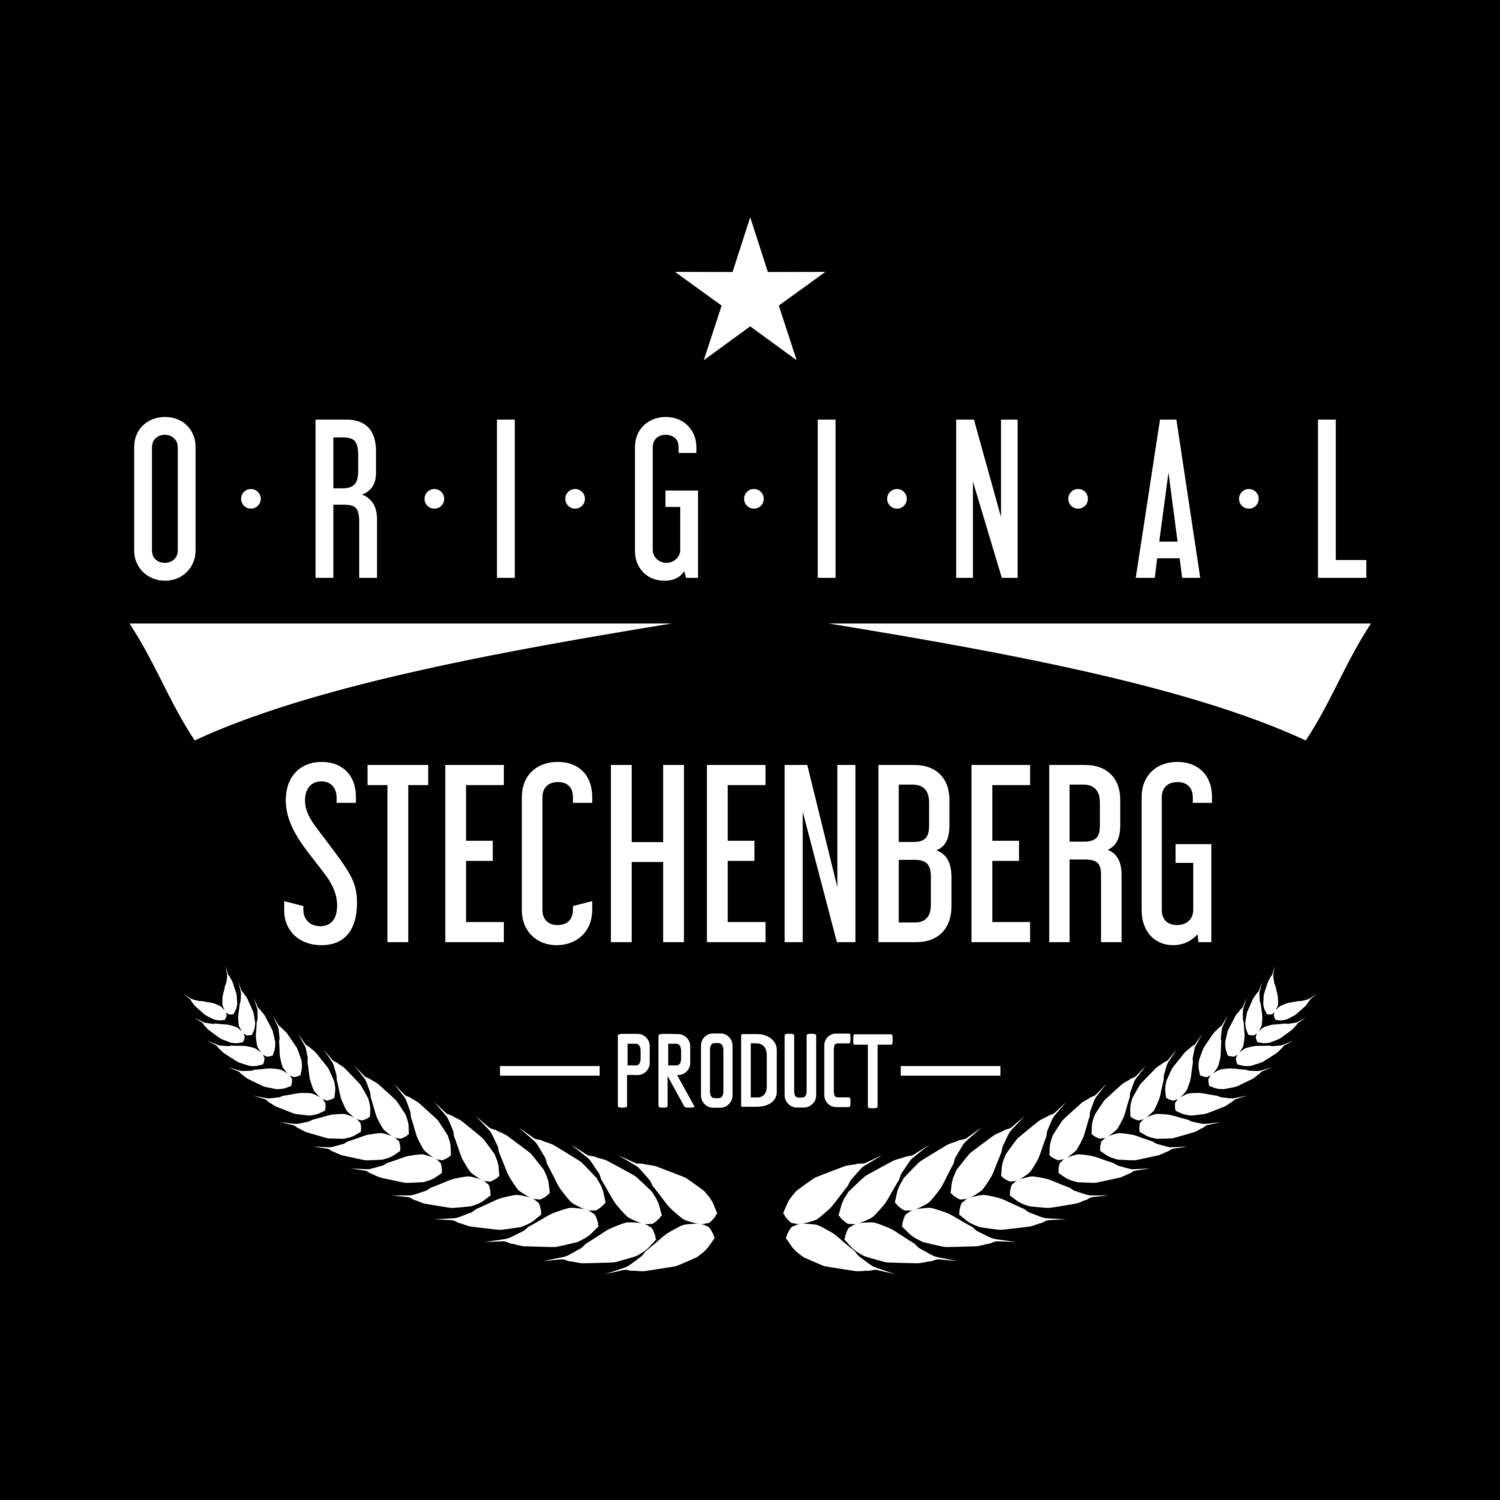 Stechenberg T-Shirt »Original Product«